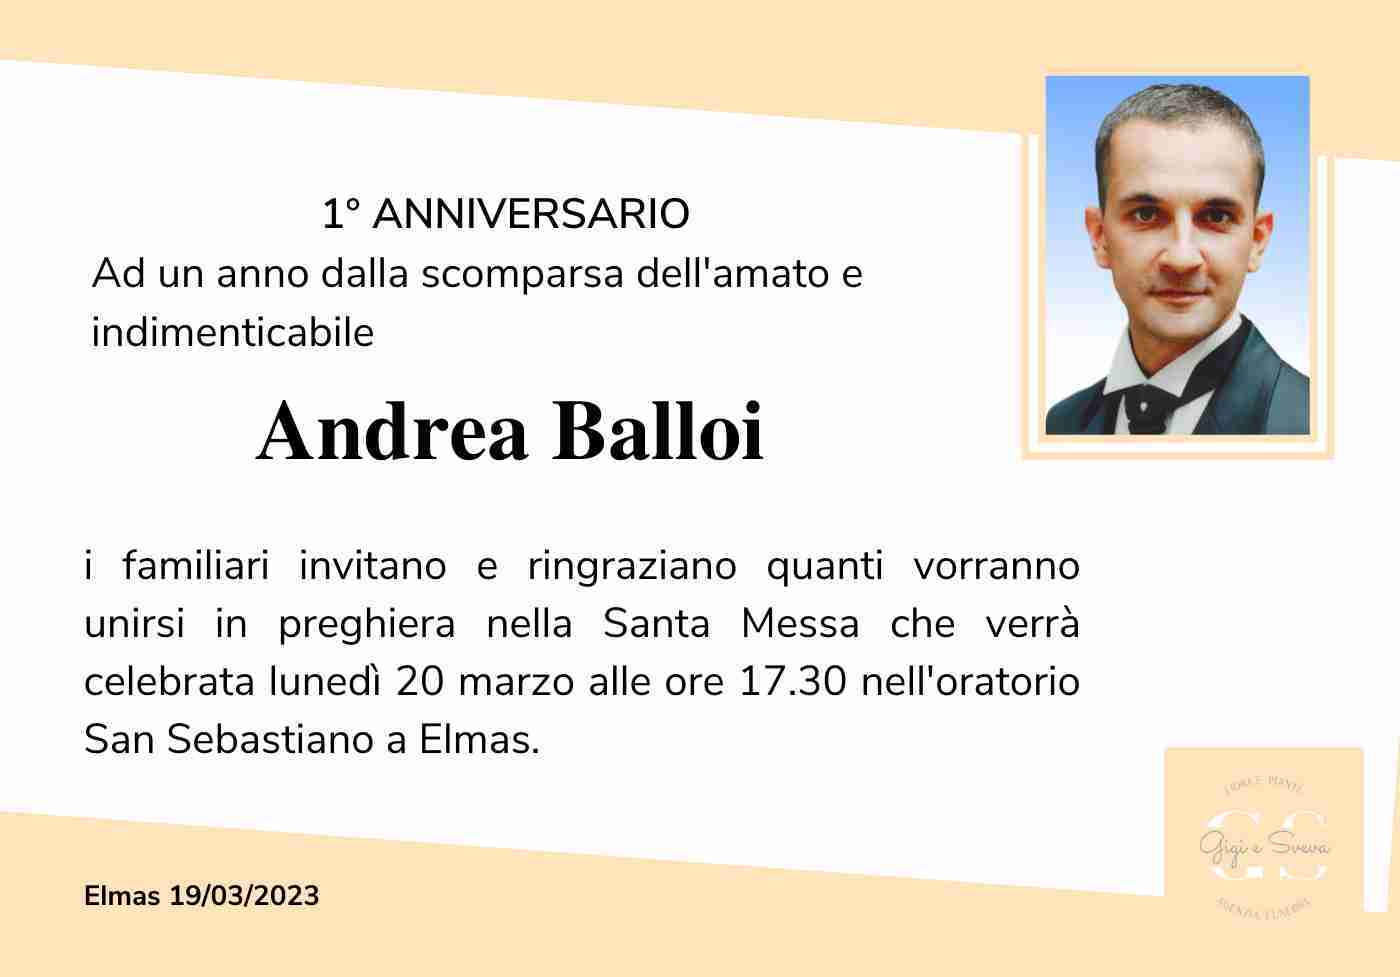 Andrea Balloi